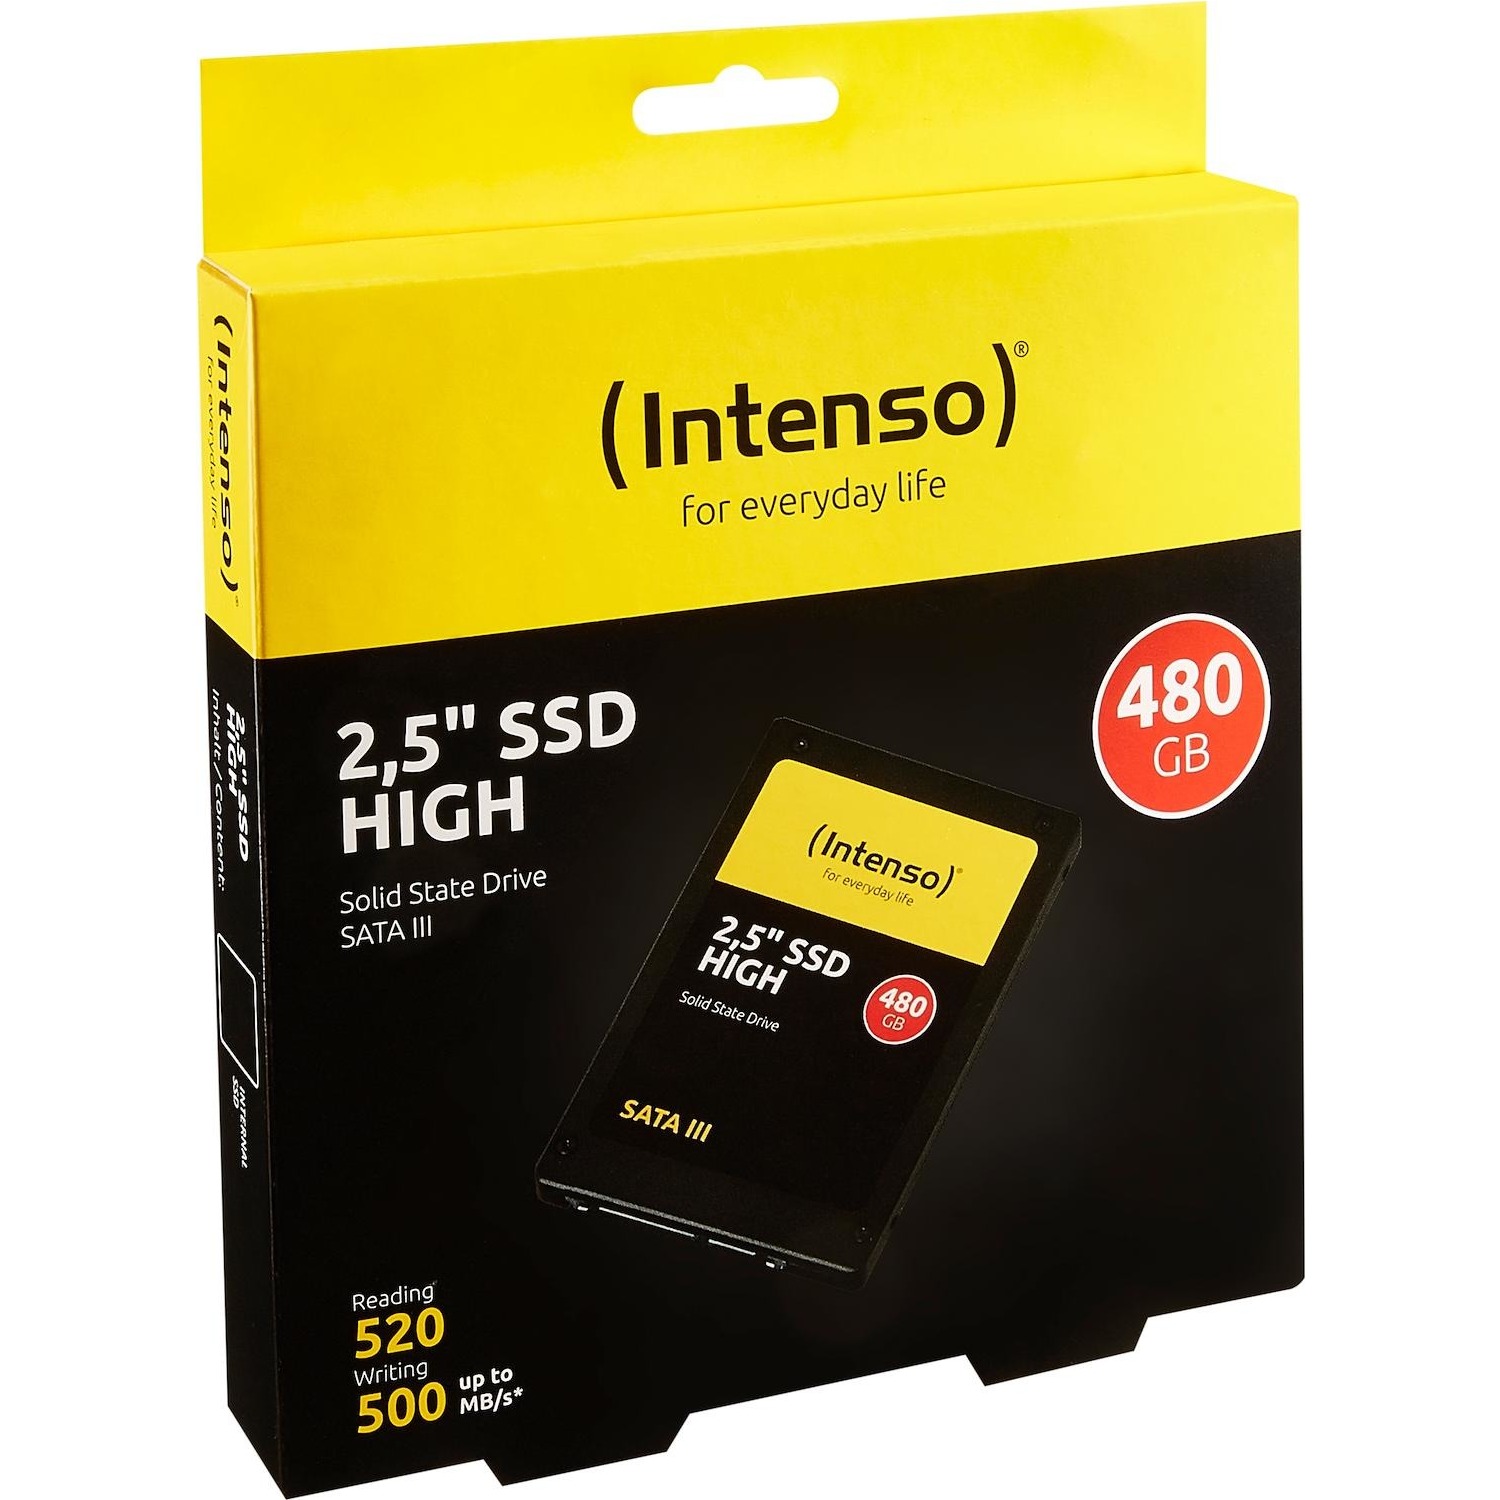 Immagine per HD SSD Intenso 480GB 2,5" da DIMOStore